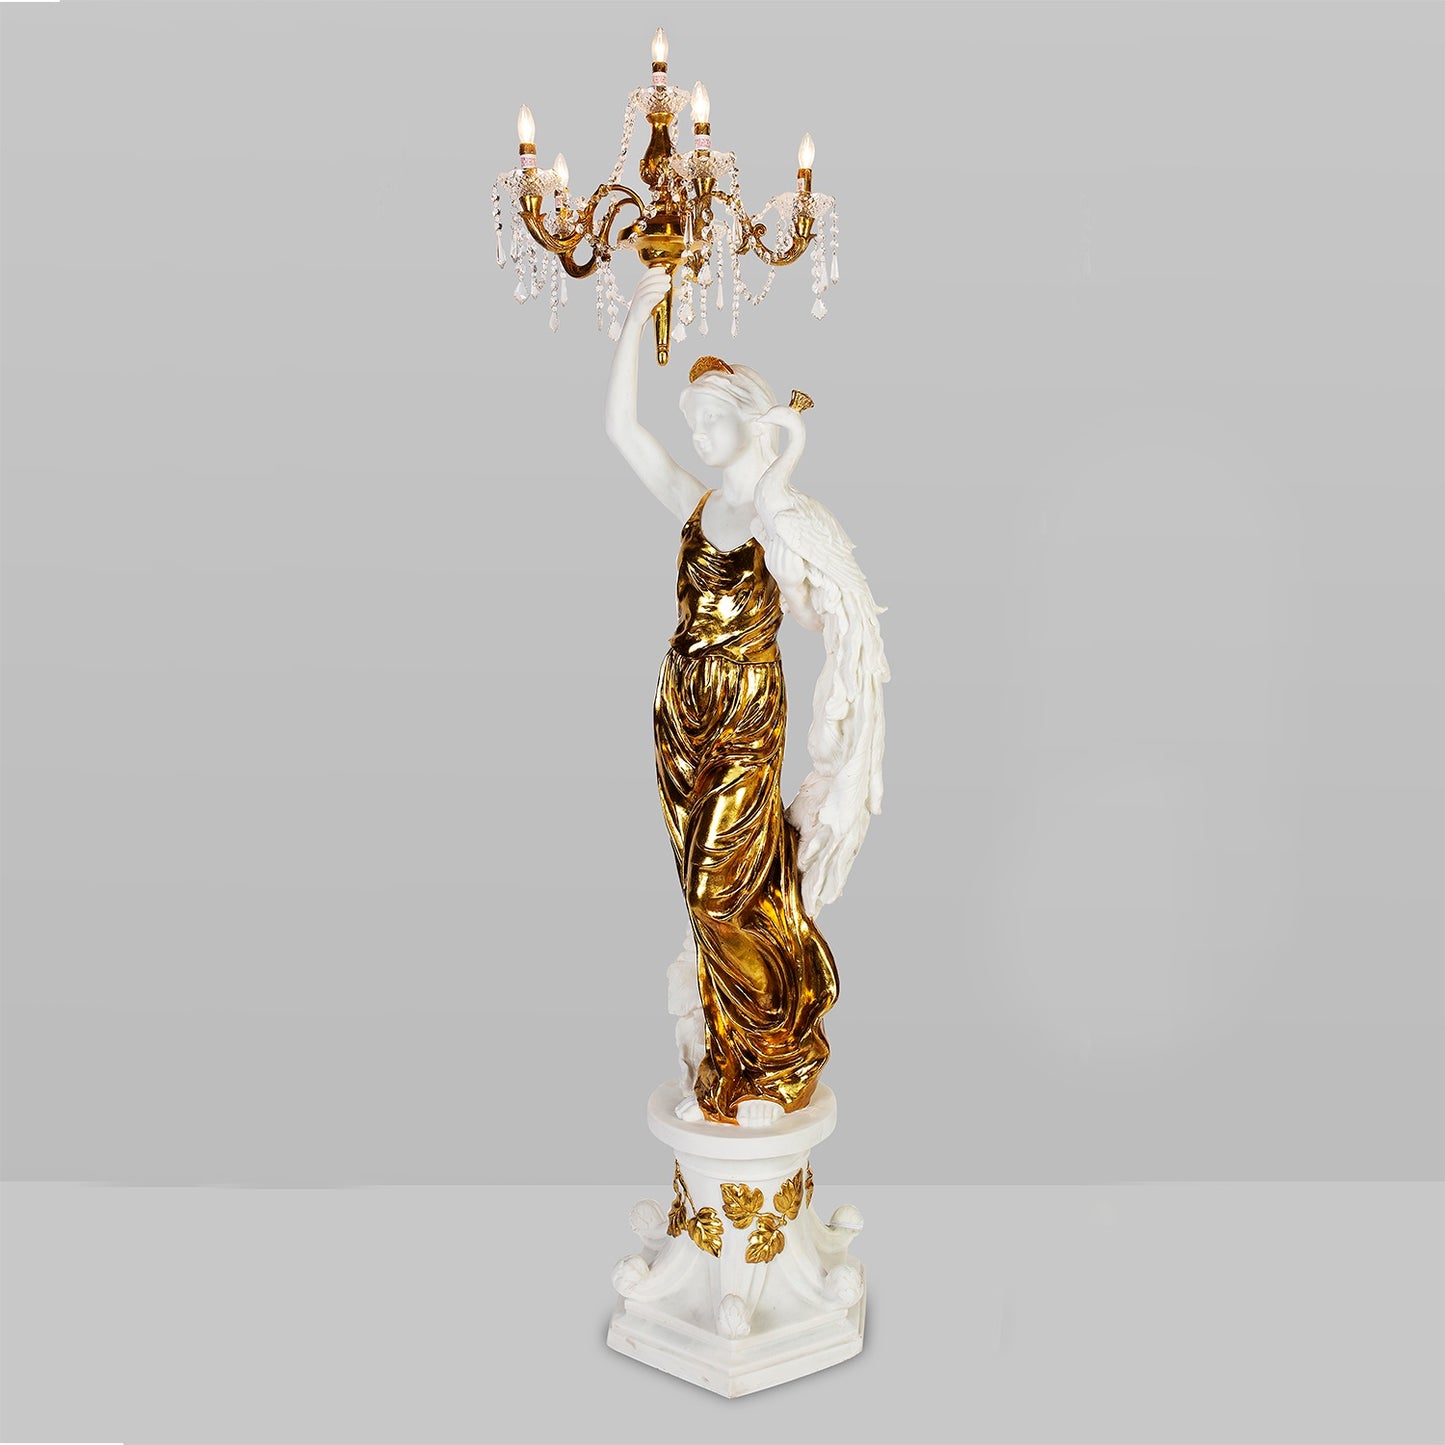 Floor Lamp in White & Metallic Gold Finish AC7941 European Traditional Victorian